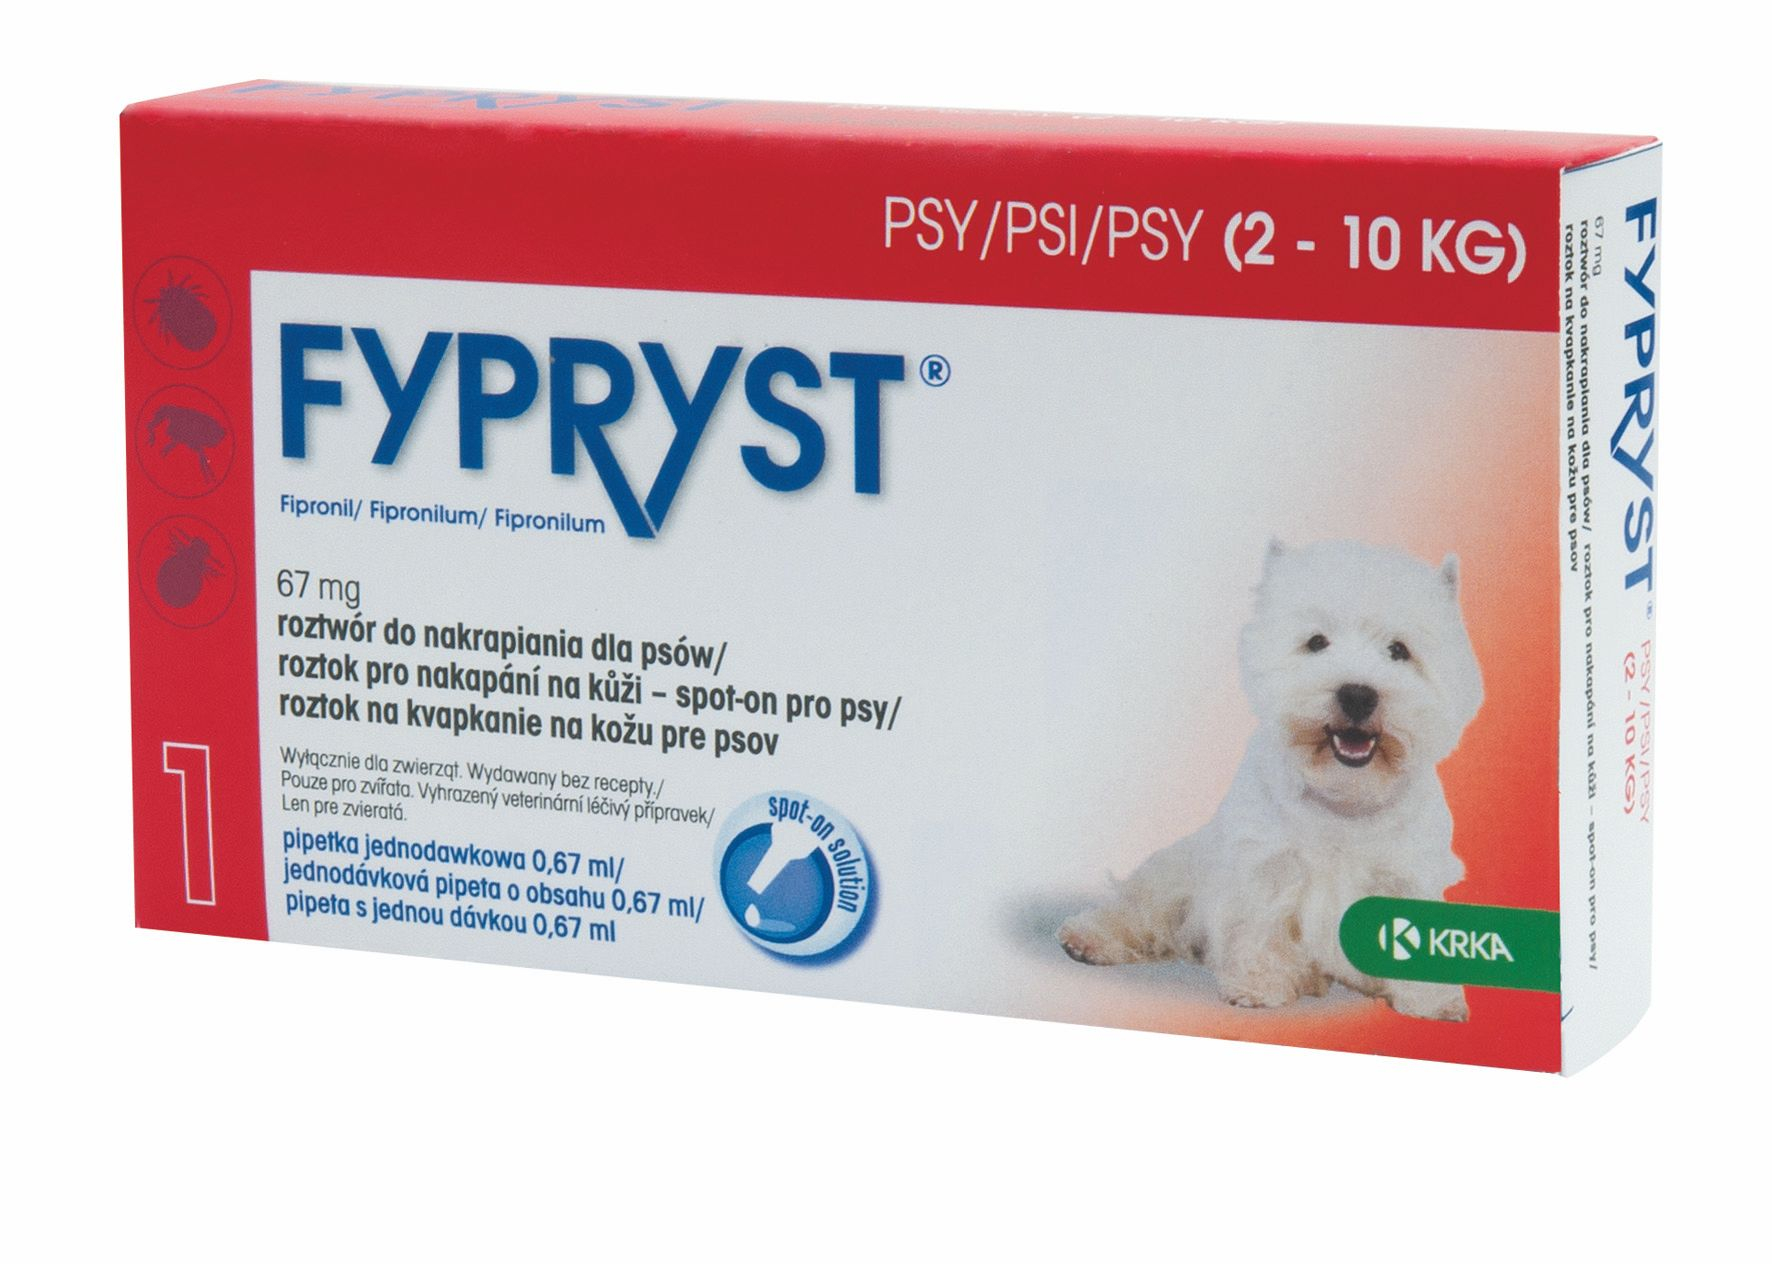 Fypryst Spot-on S pes 2-10 kg 1 pipeta Fypryst